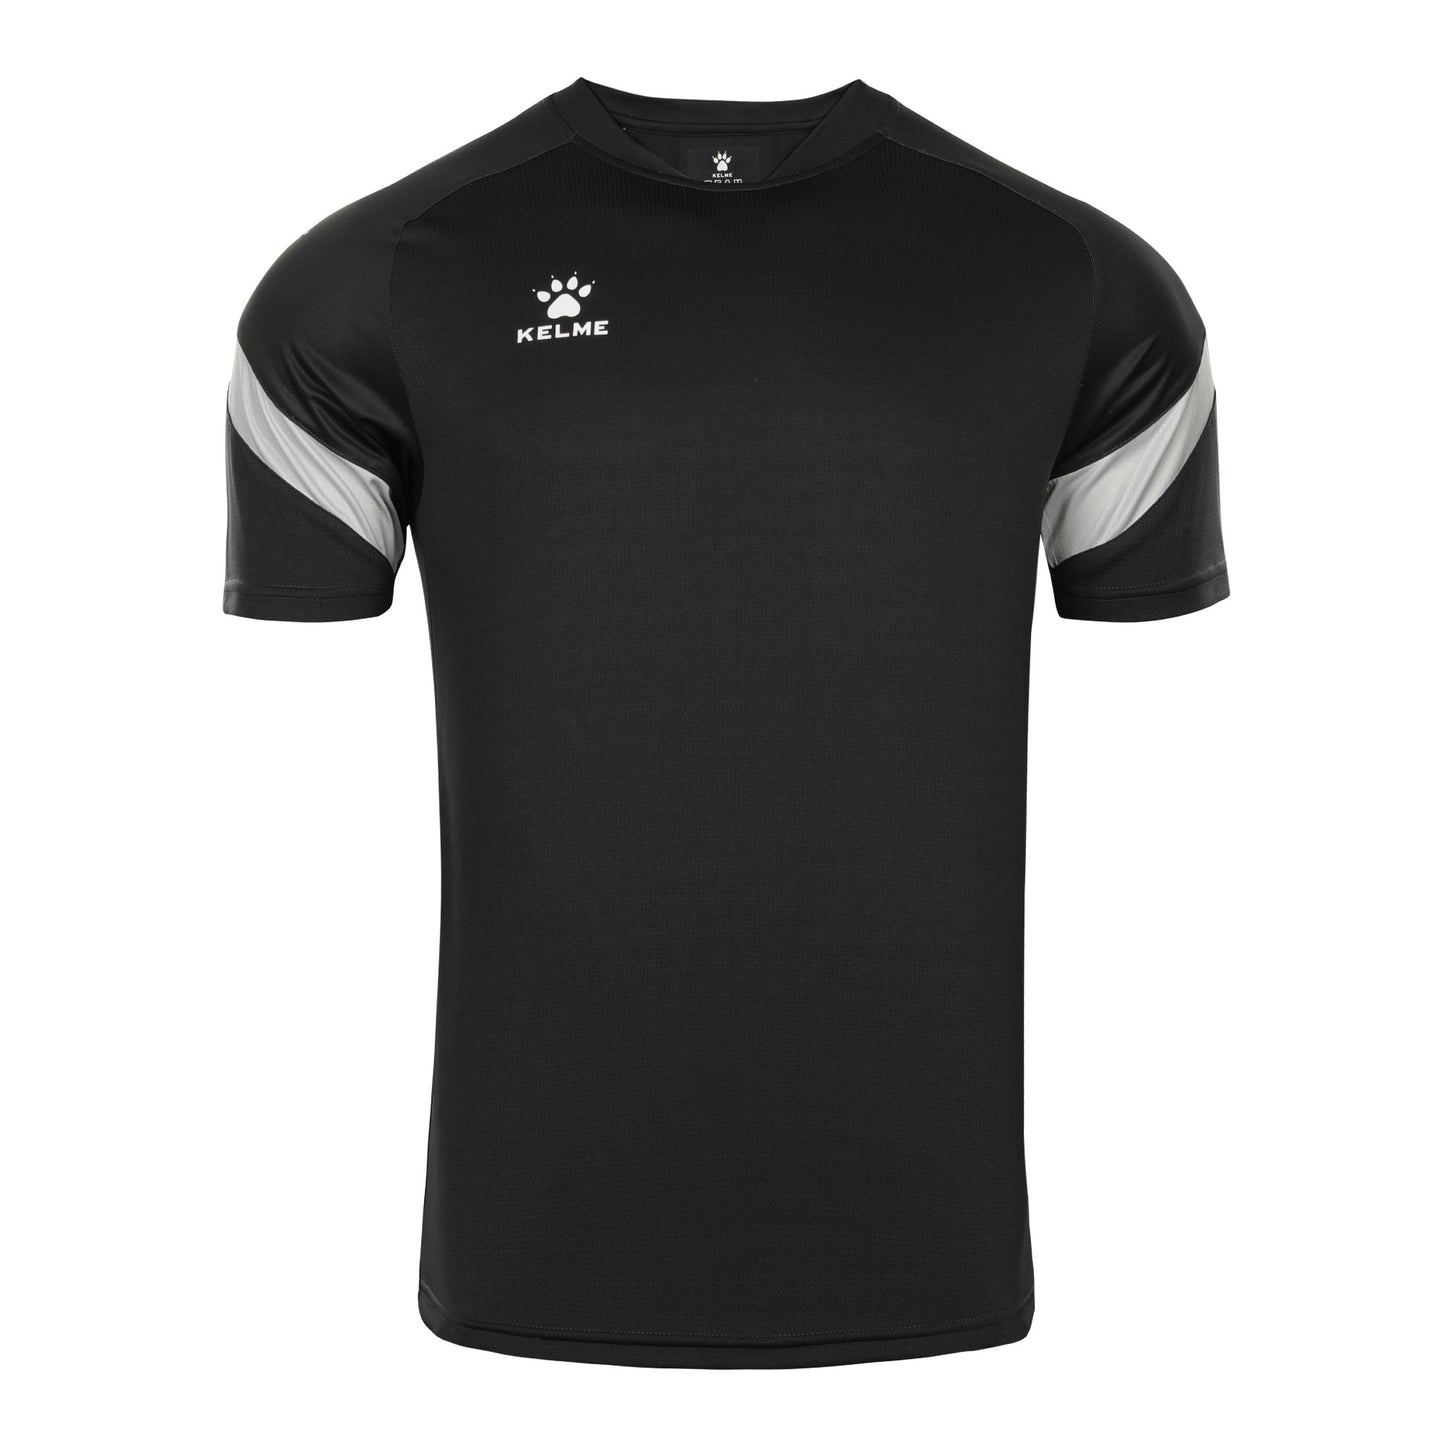 Warrior T-Shirt- Black/Grey